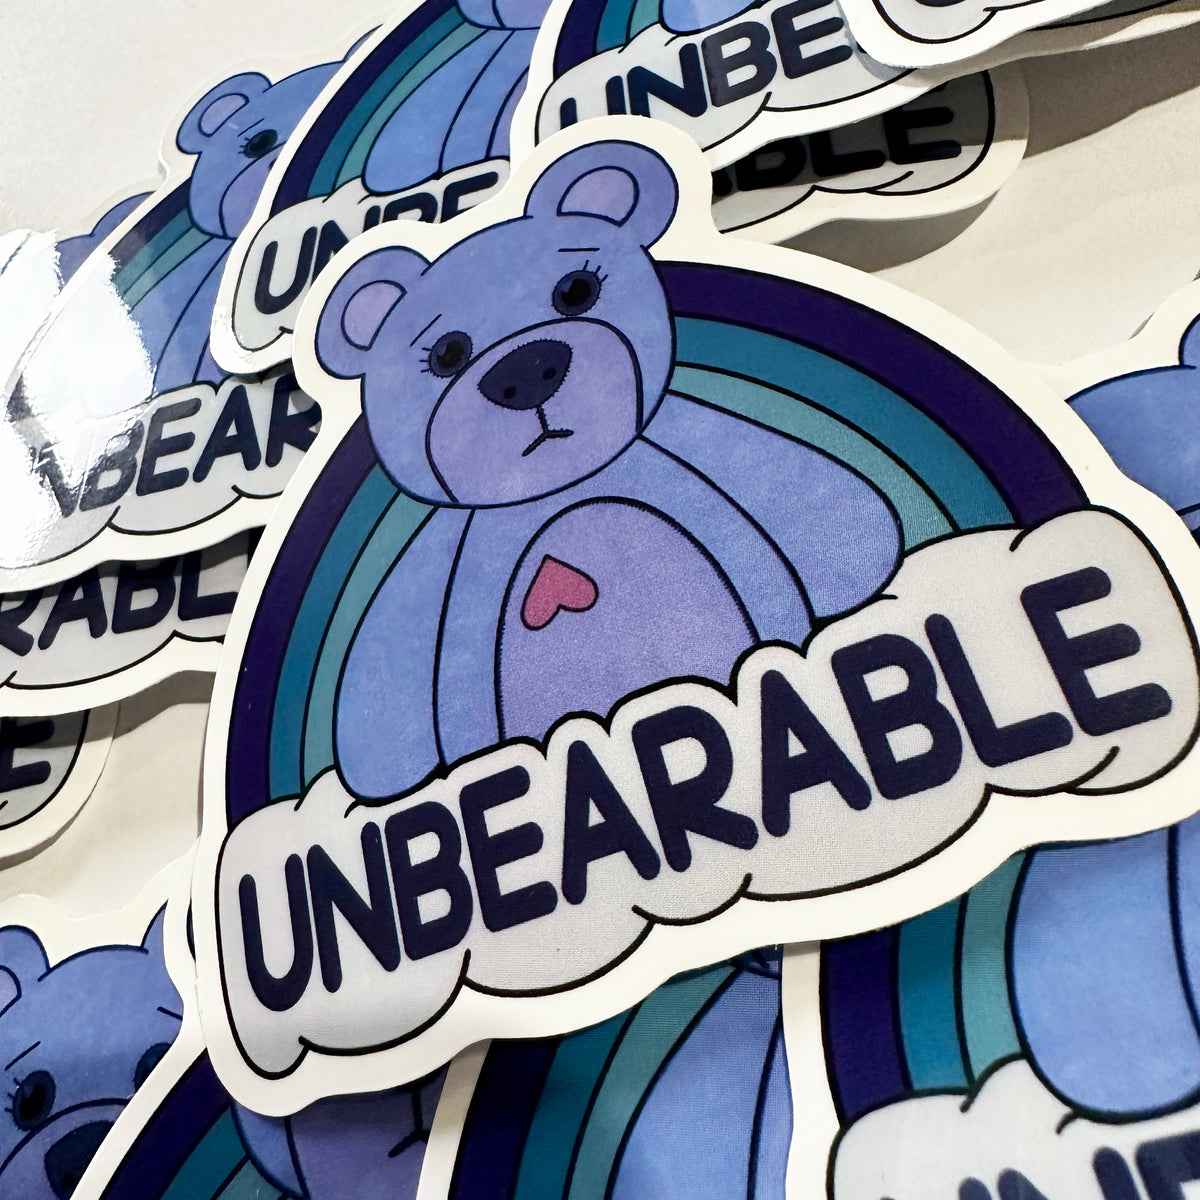 Unbearable Sad Bear Sticker